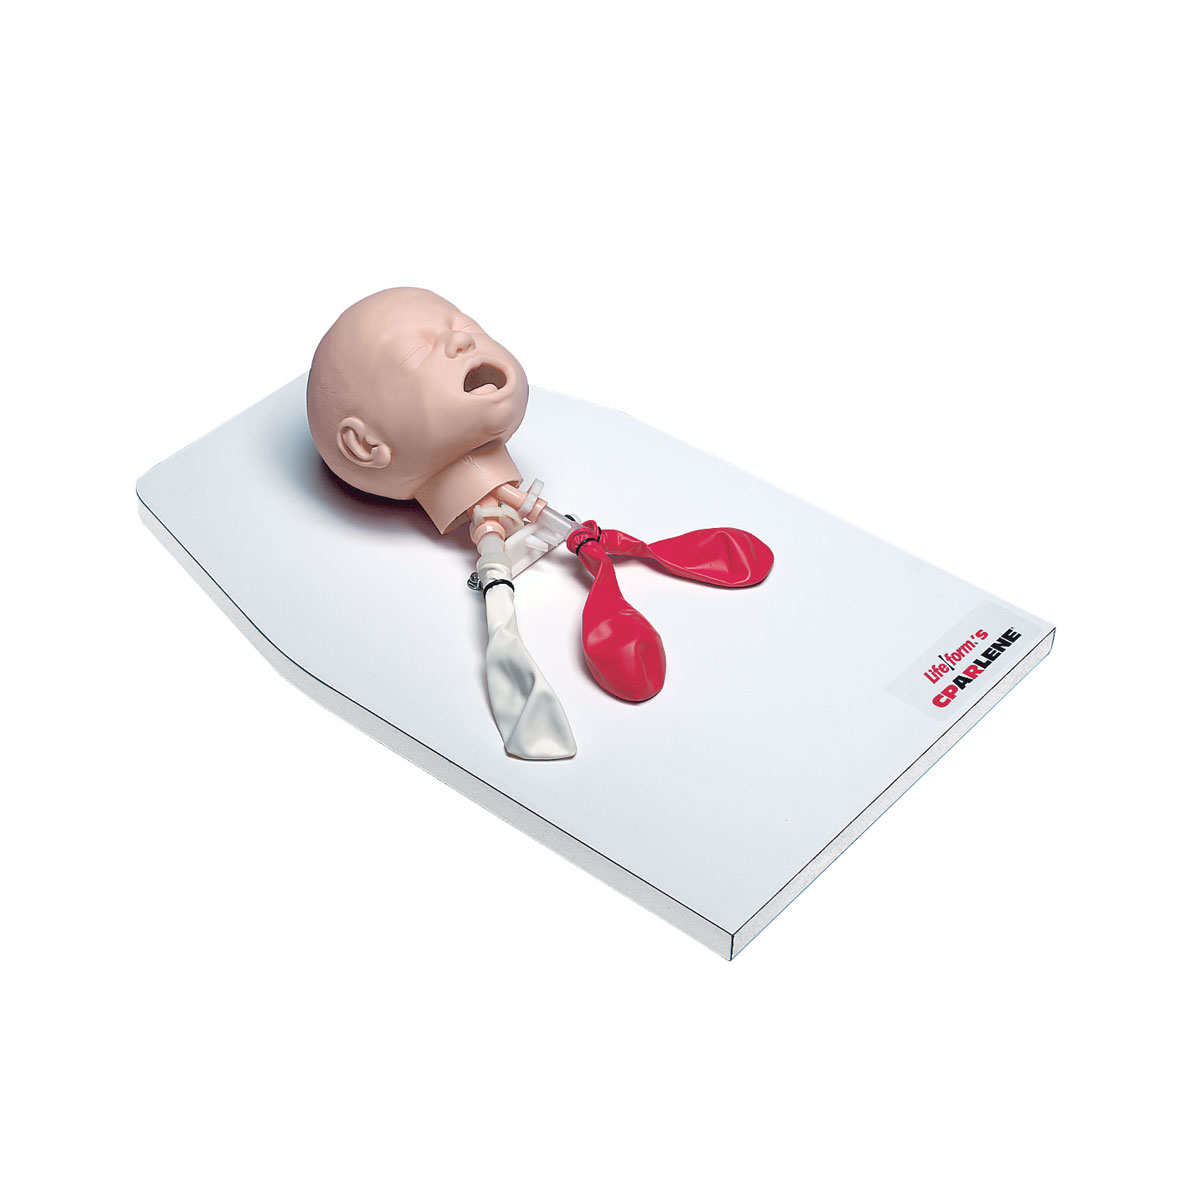 Beatmungstrainer Baby auf Sockel, Bestellnummer 1017954, W44667, LF03623U, Nasco Life/form